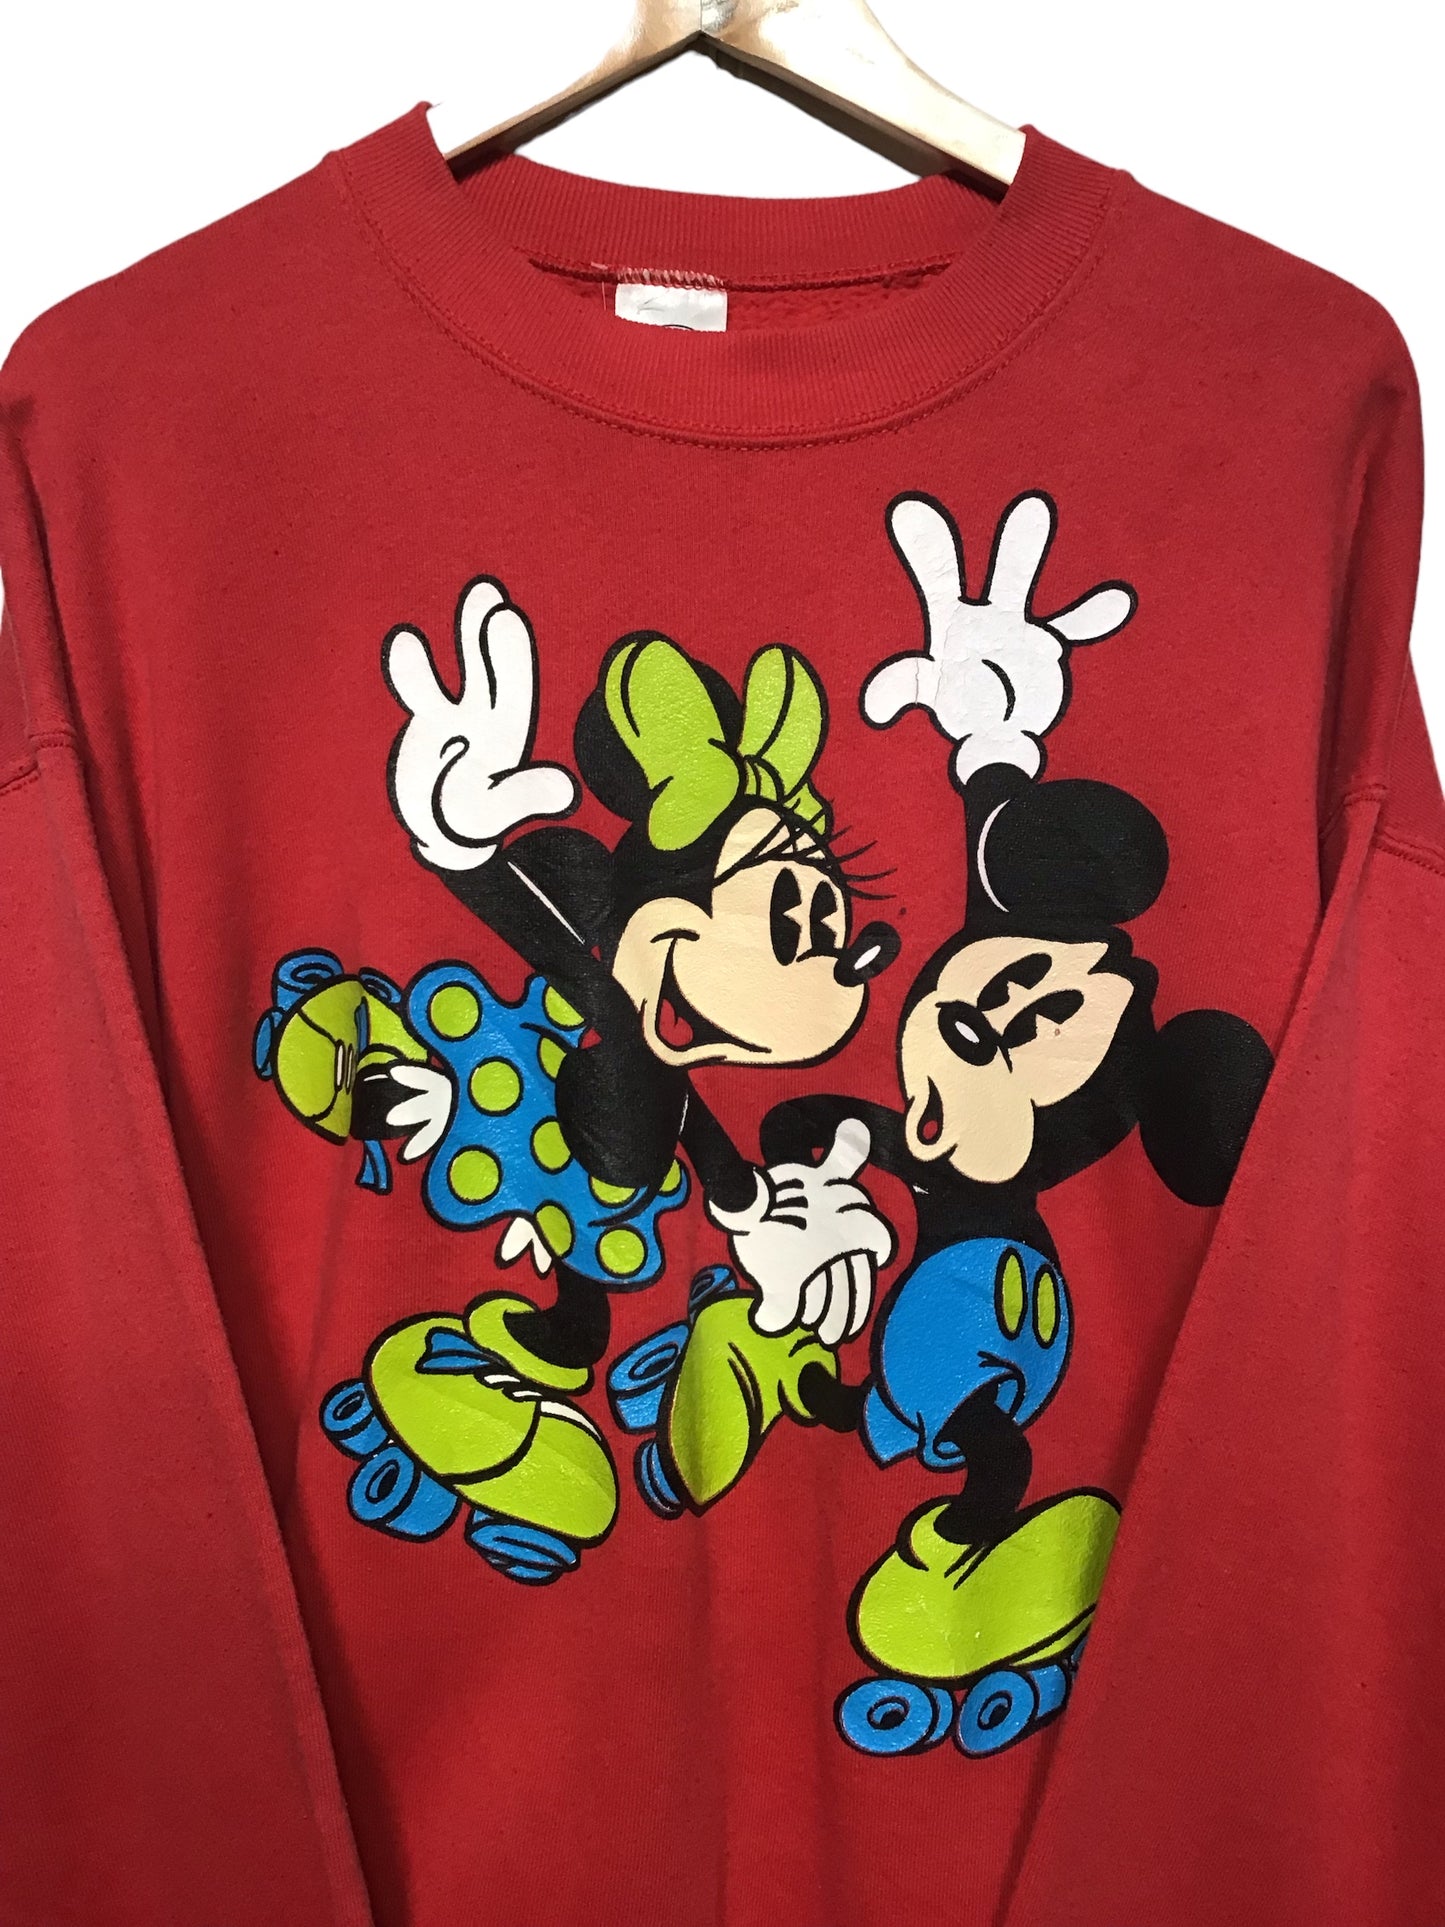 Mickey and Minnie Mouse Disney Sweatshirt (Size XL)